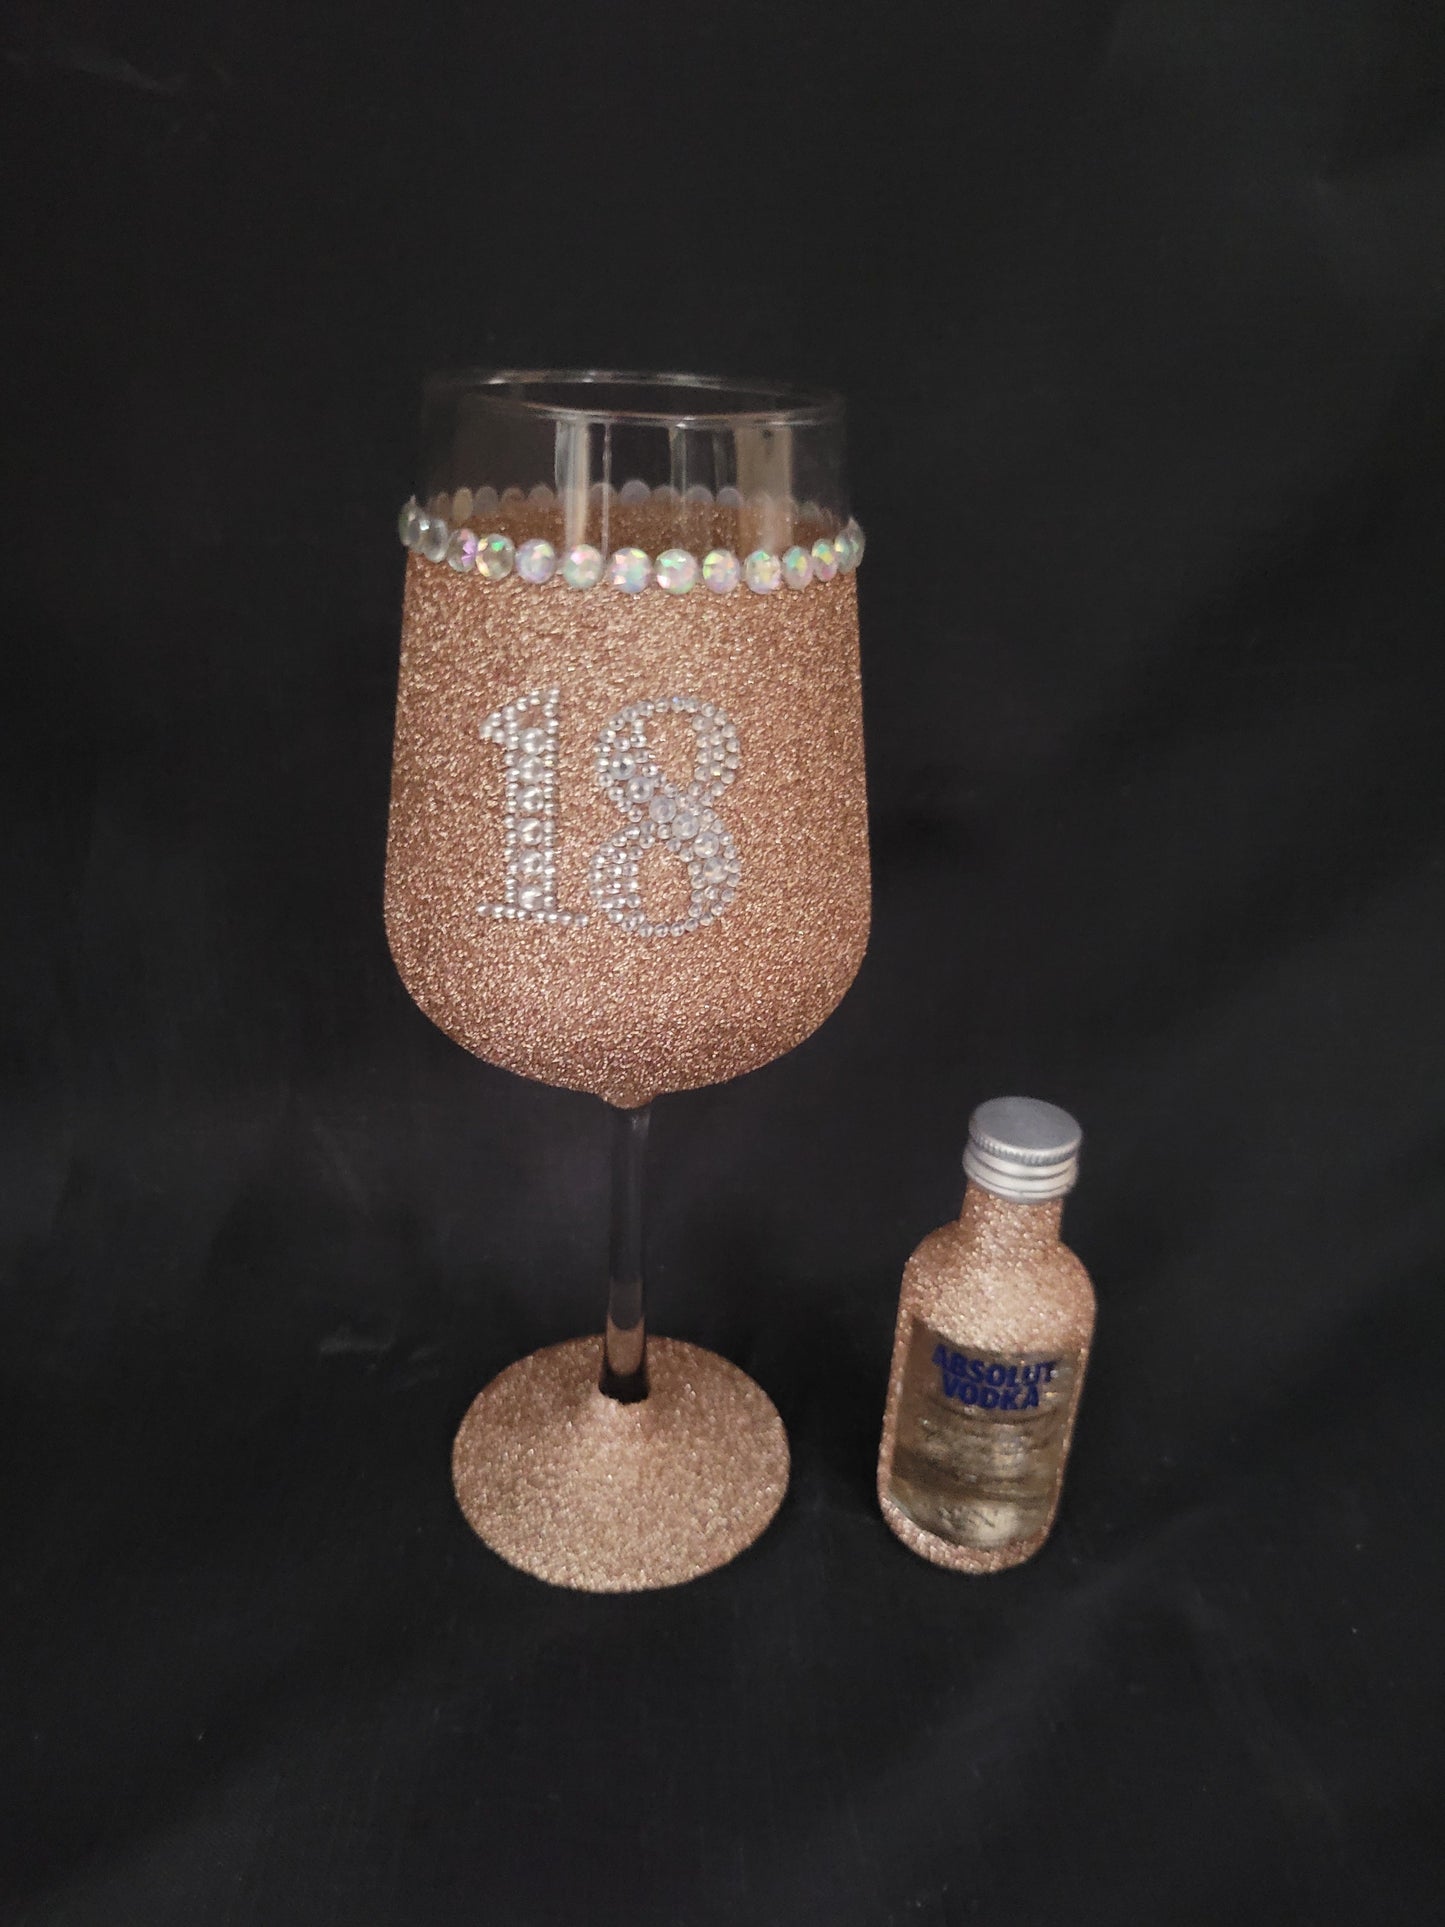 Mini Smirnoff and personalised glass set